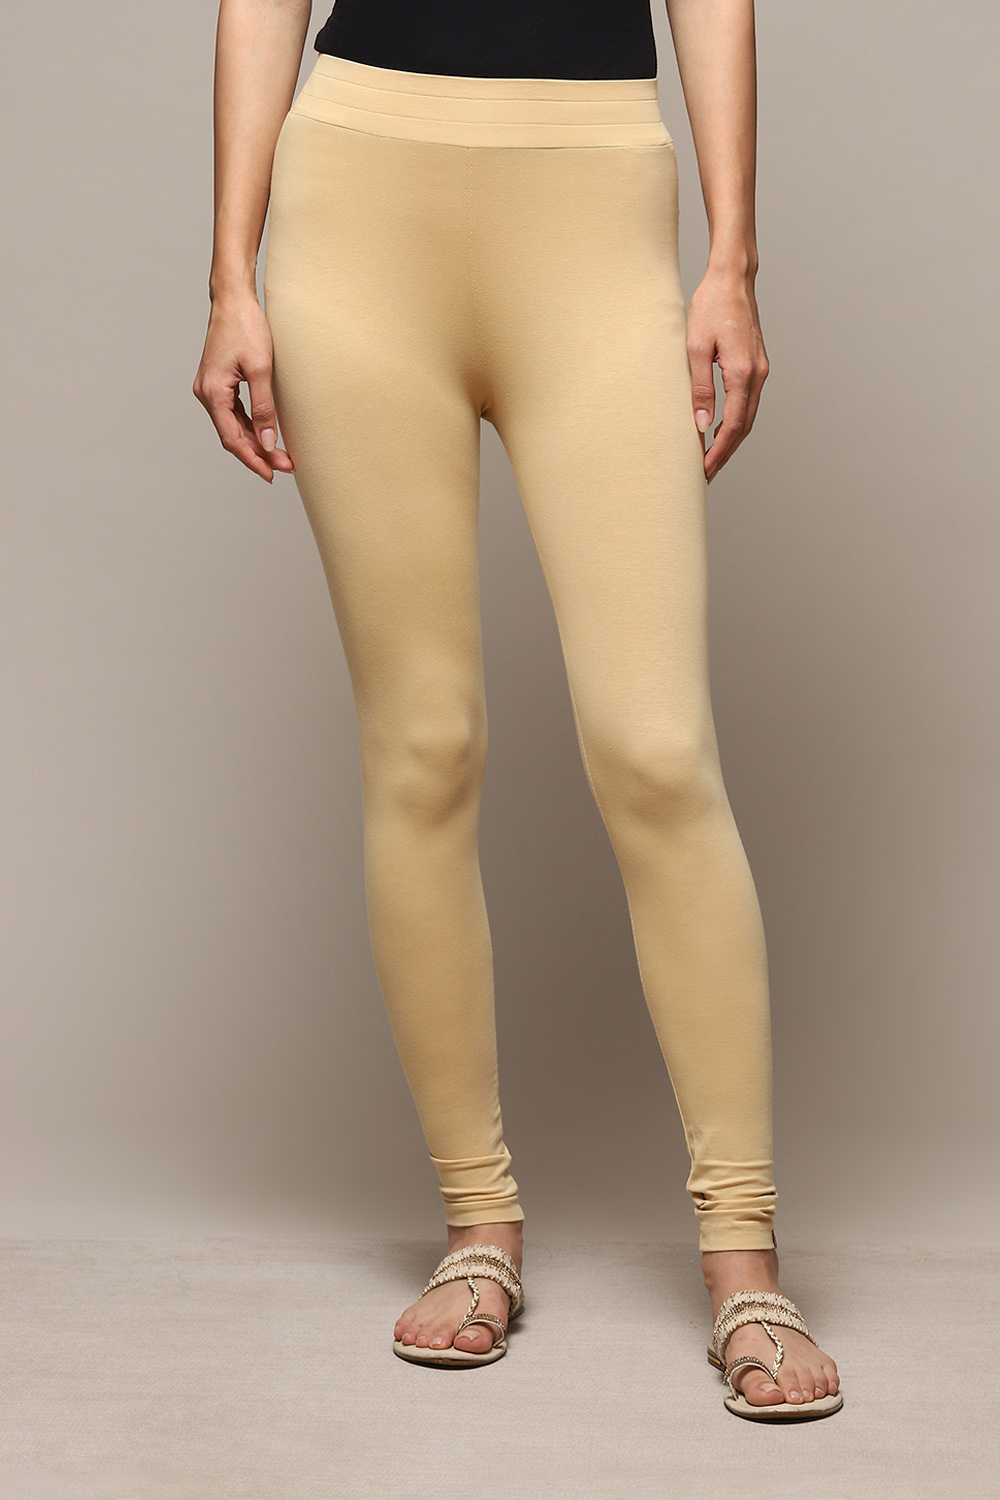 Skin Color (Beige) Mid Waist Ladies Beige Cotton Legging, Casual Wear, Slim  Fit at Rs 399 in Coimbatore